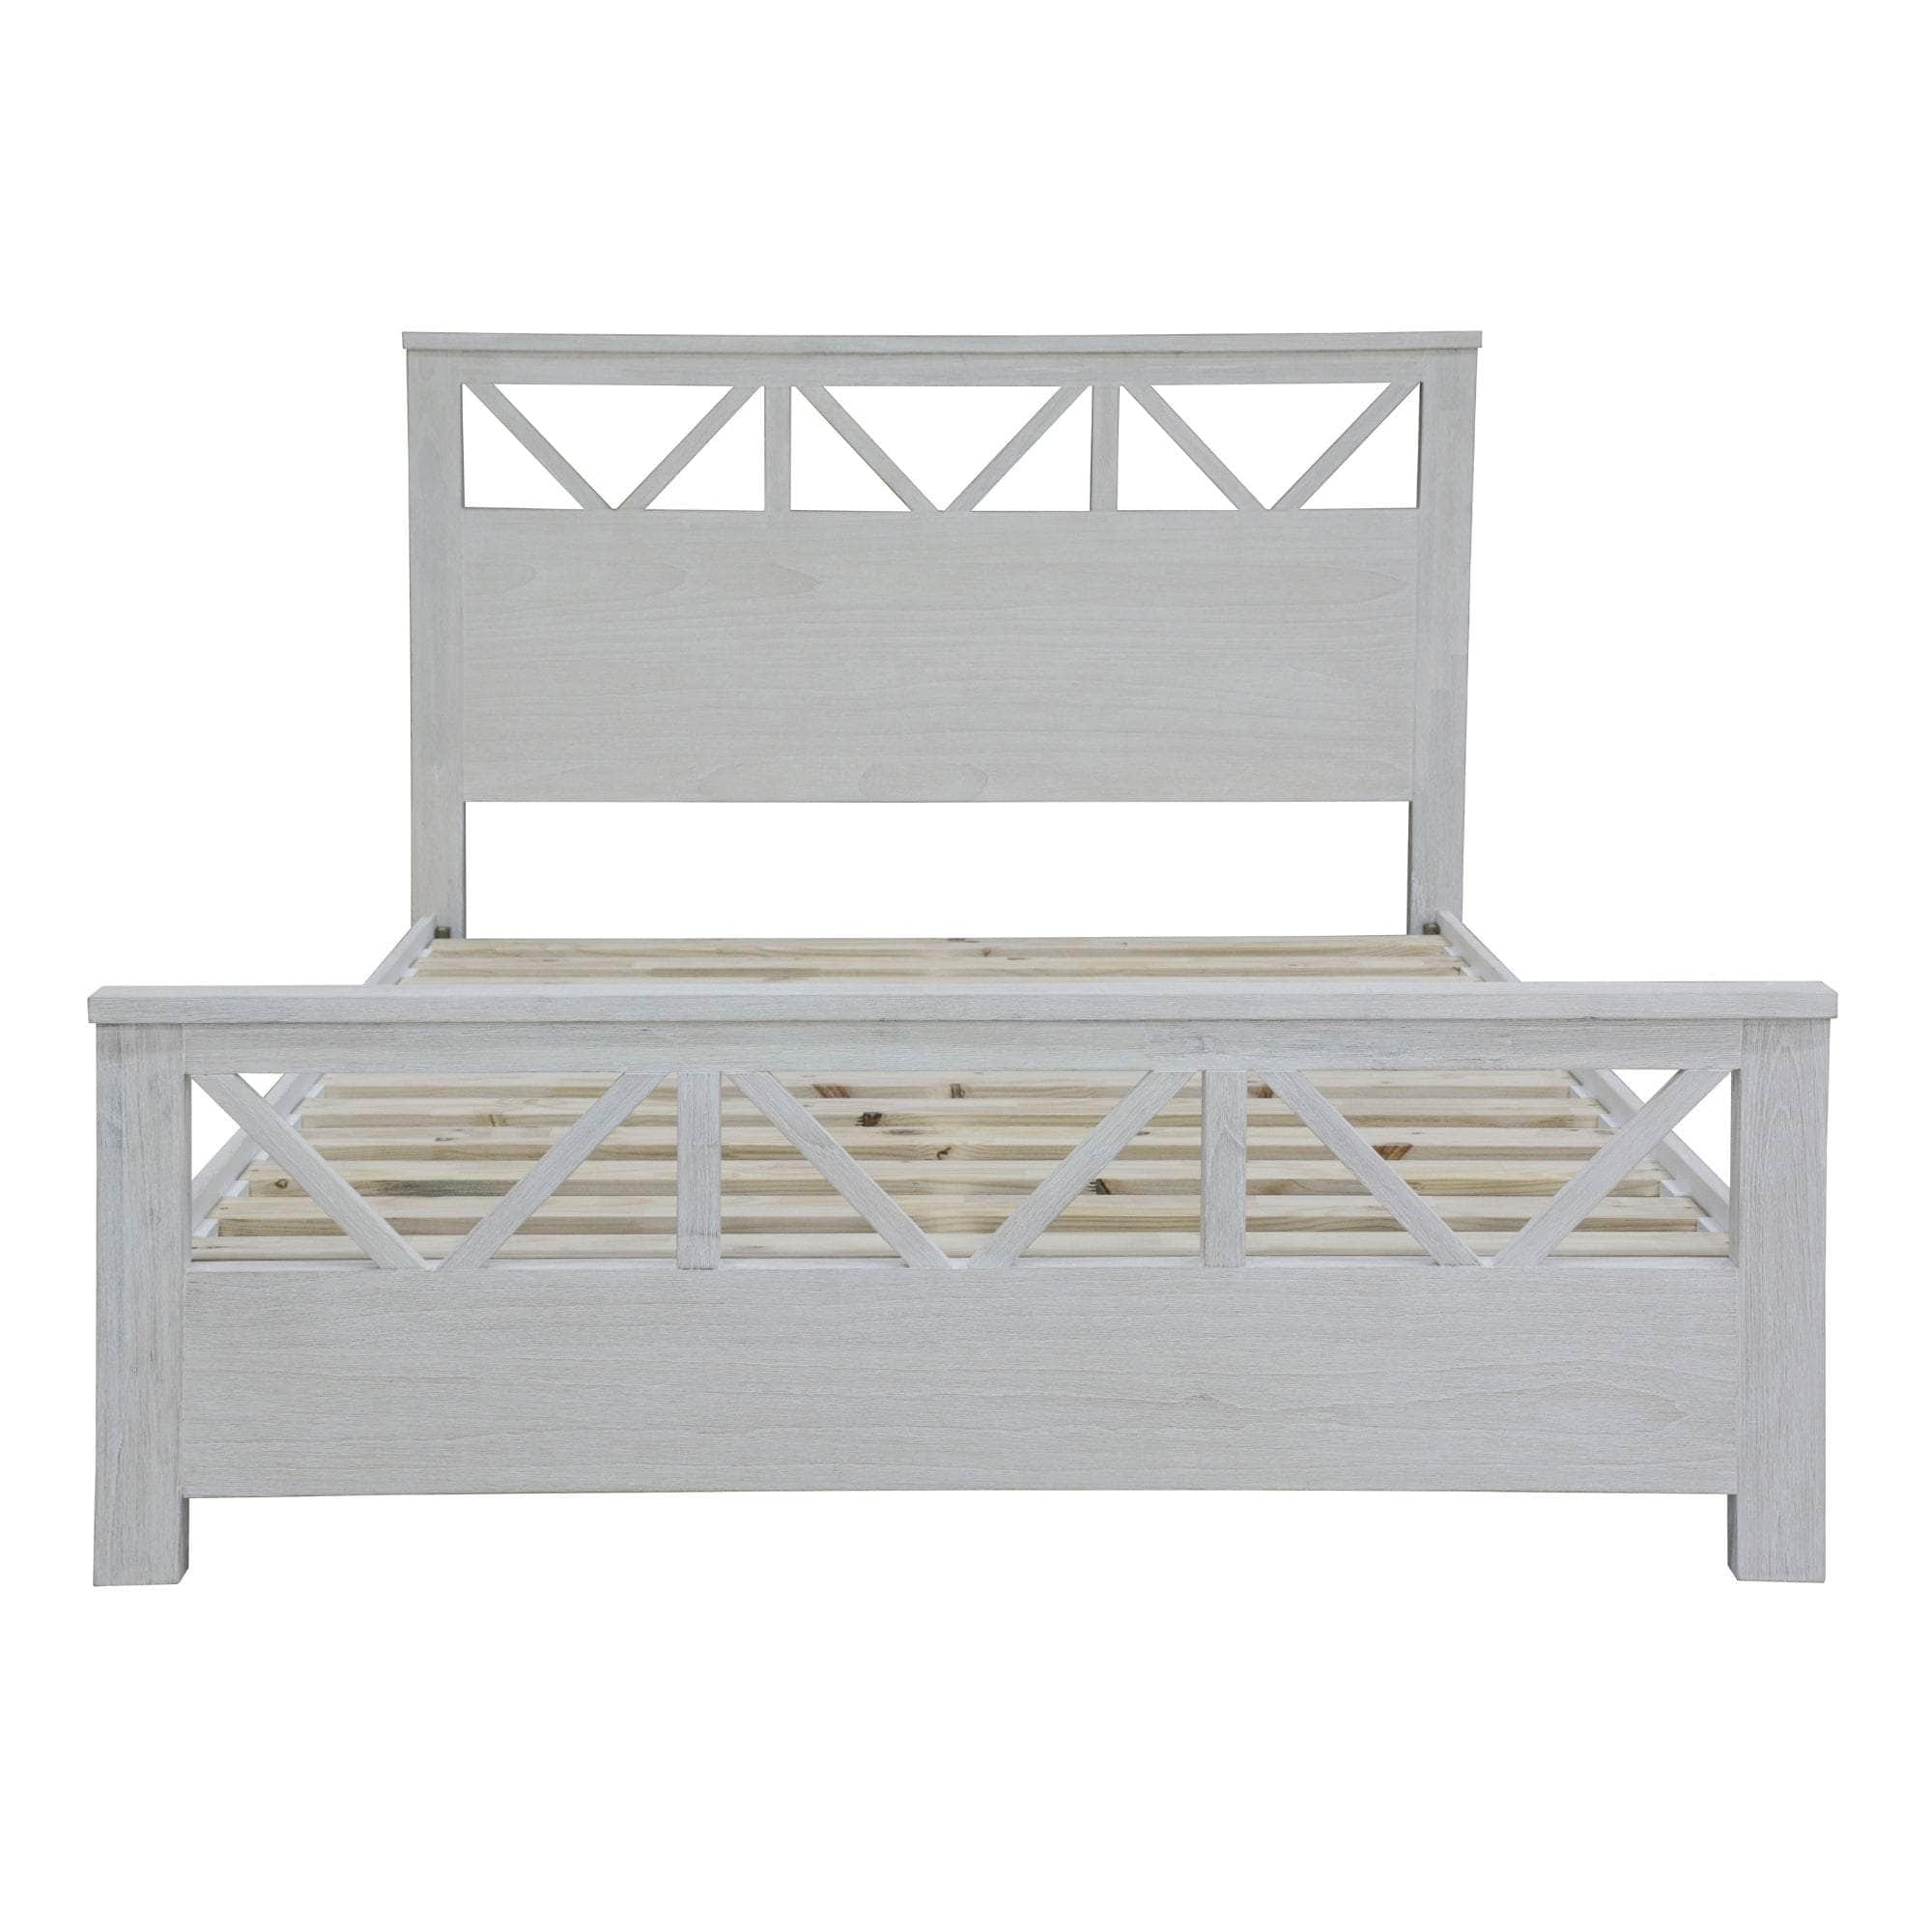 King Size Bed Frame Solid Timber Wood Mattress Base White Wash